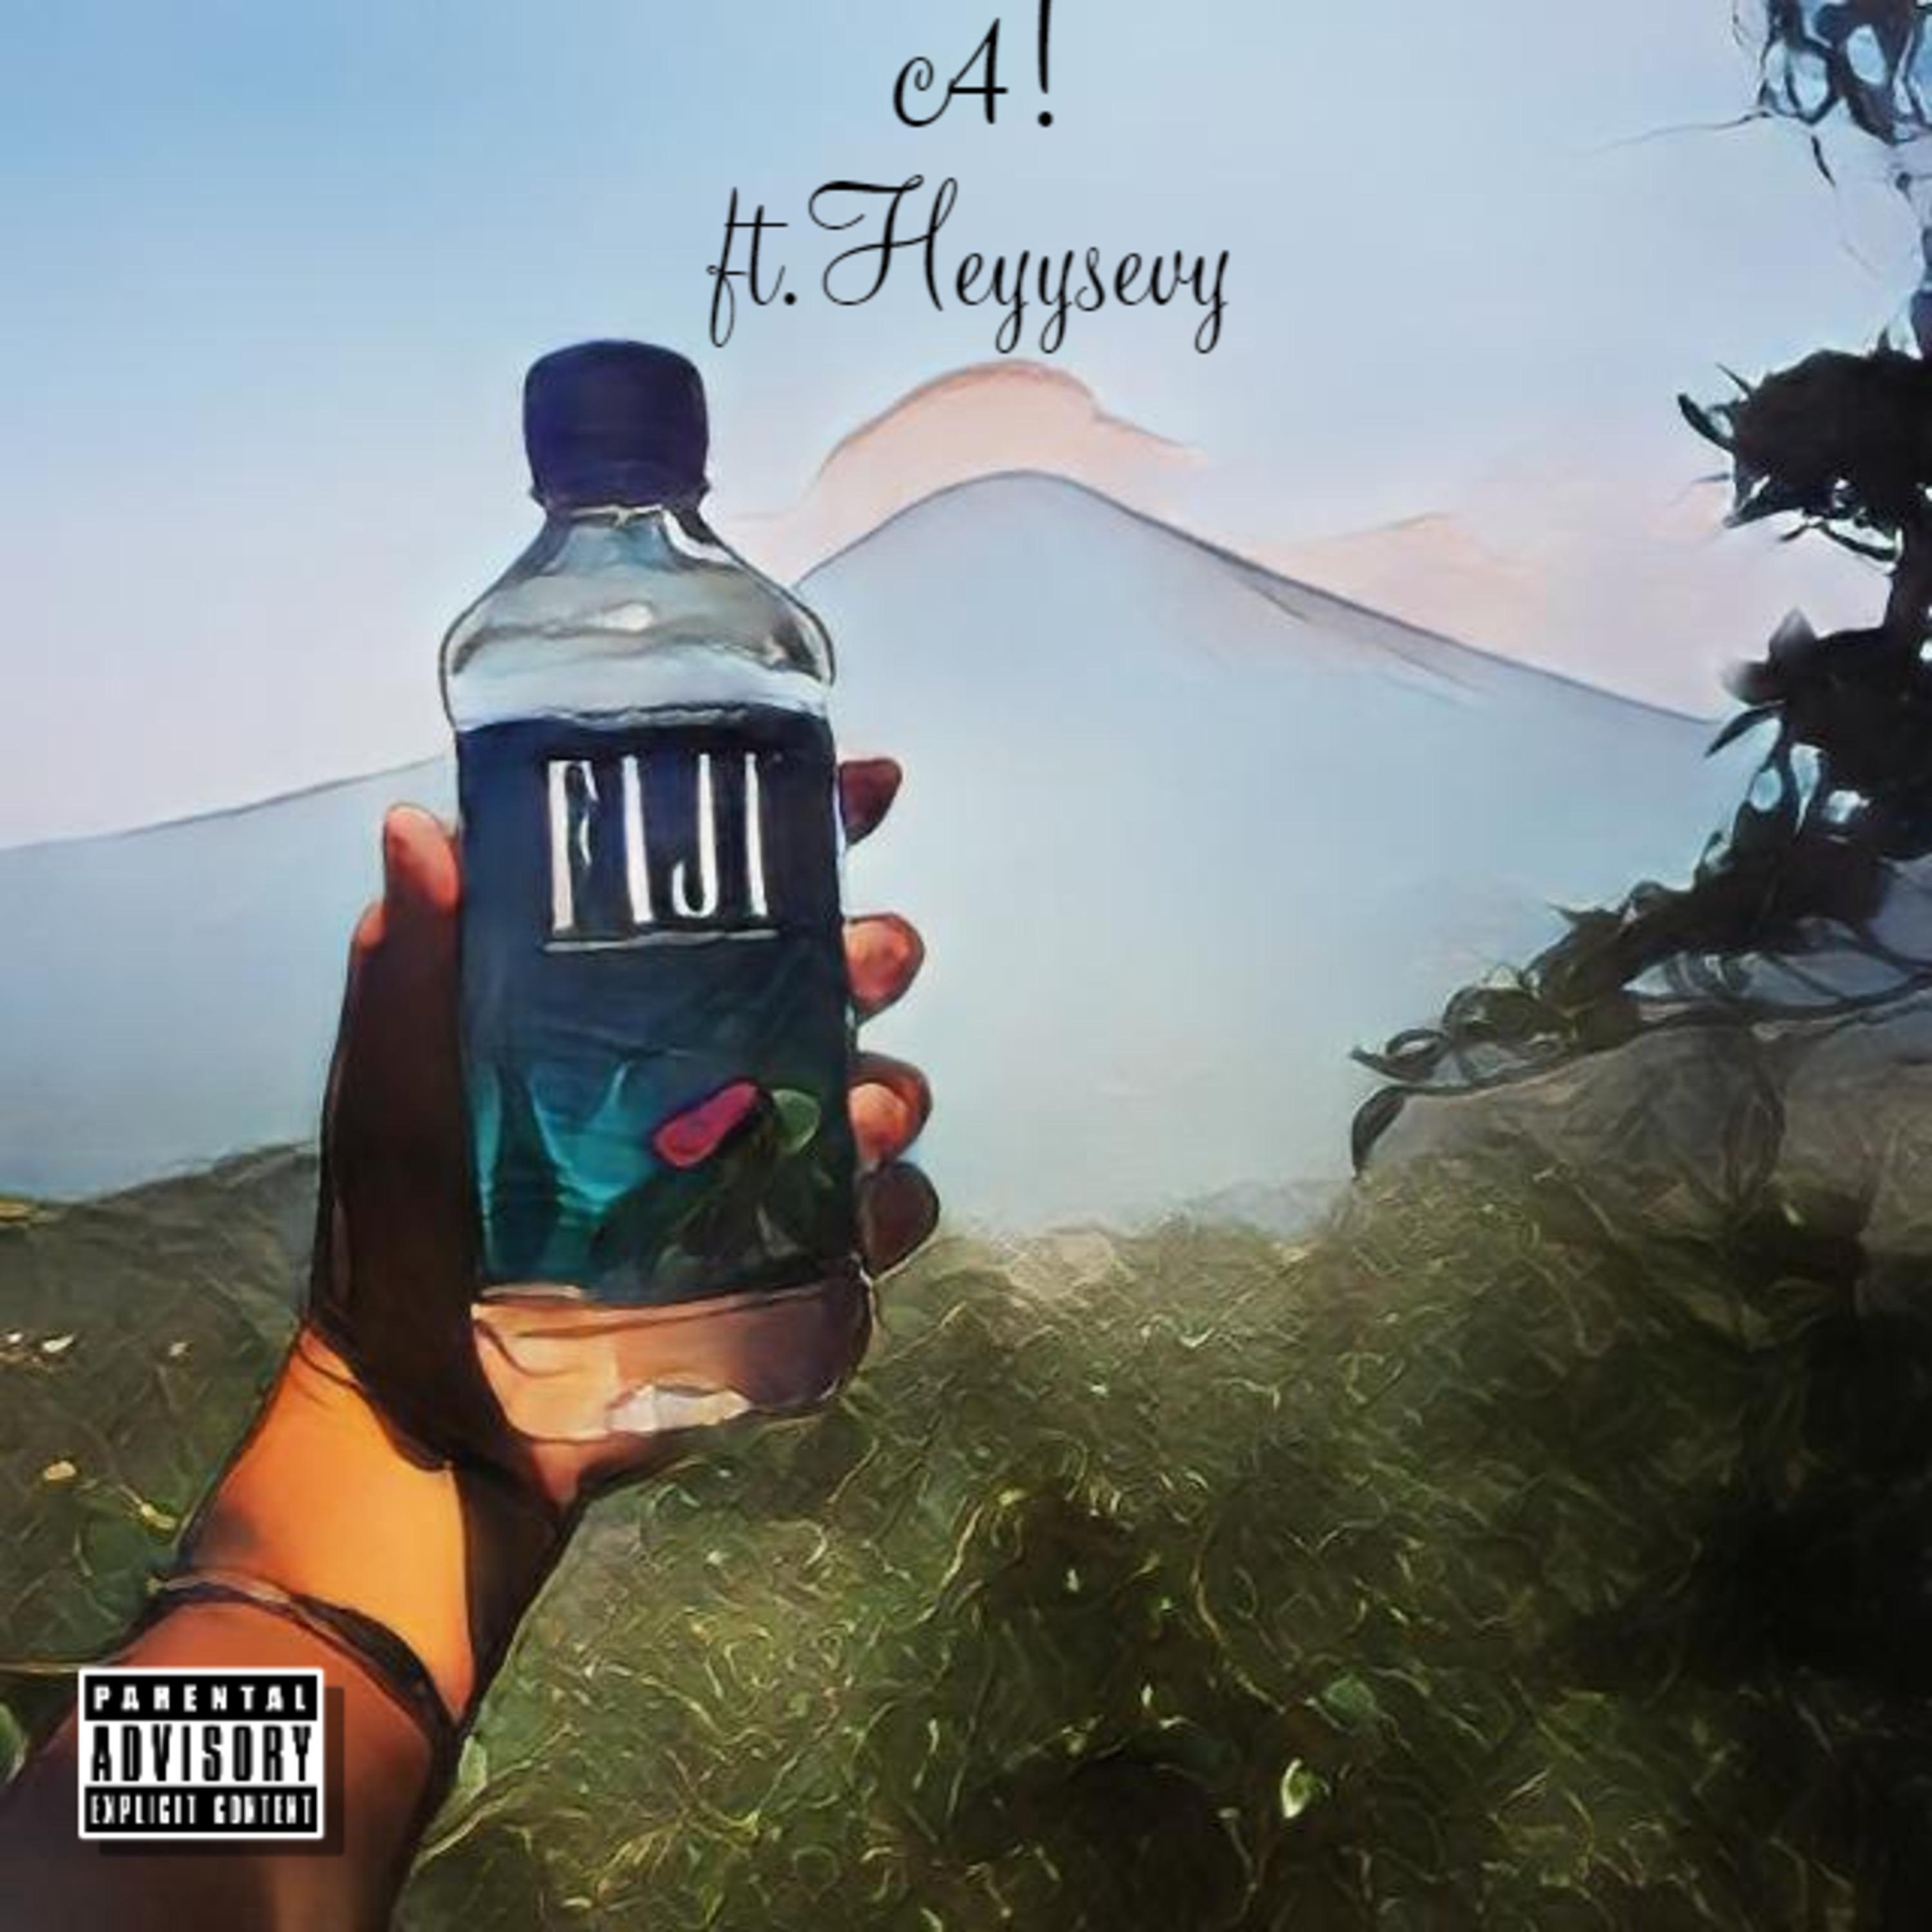 C4! - Fiji (feat. Heyysevy)